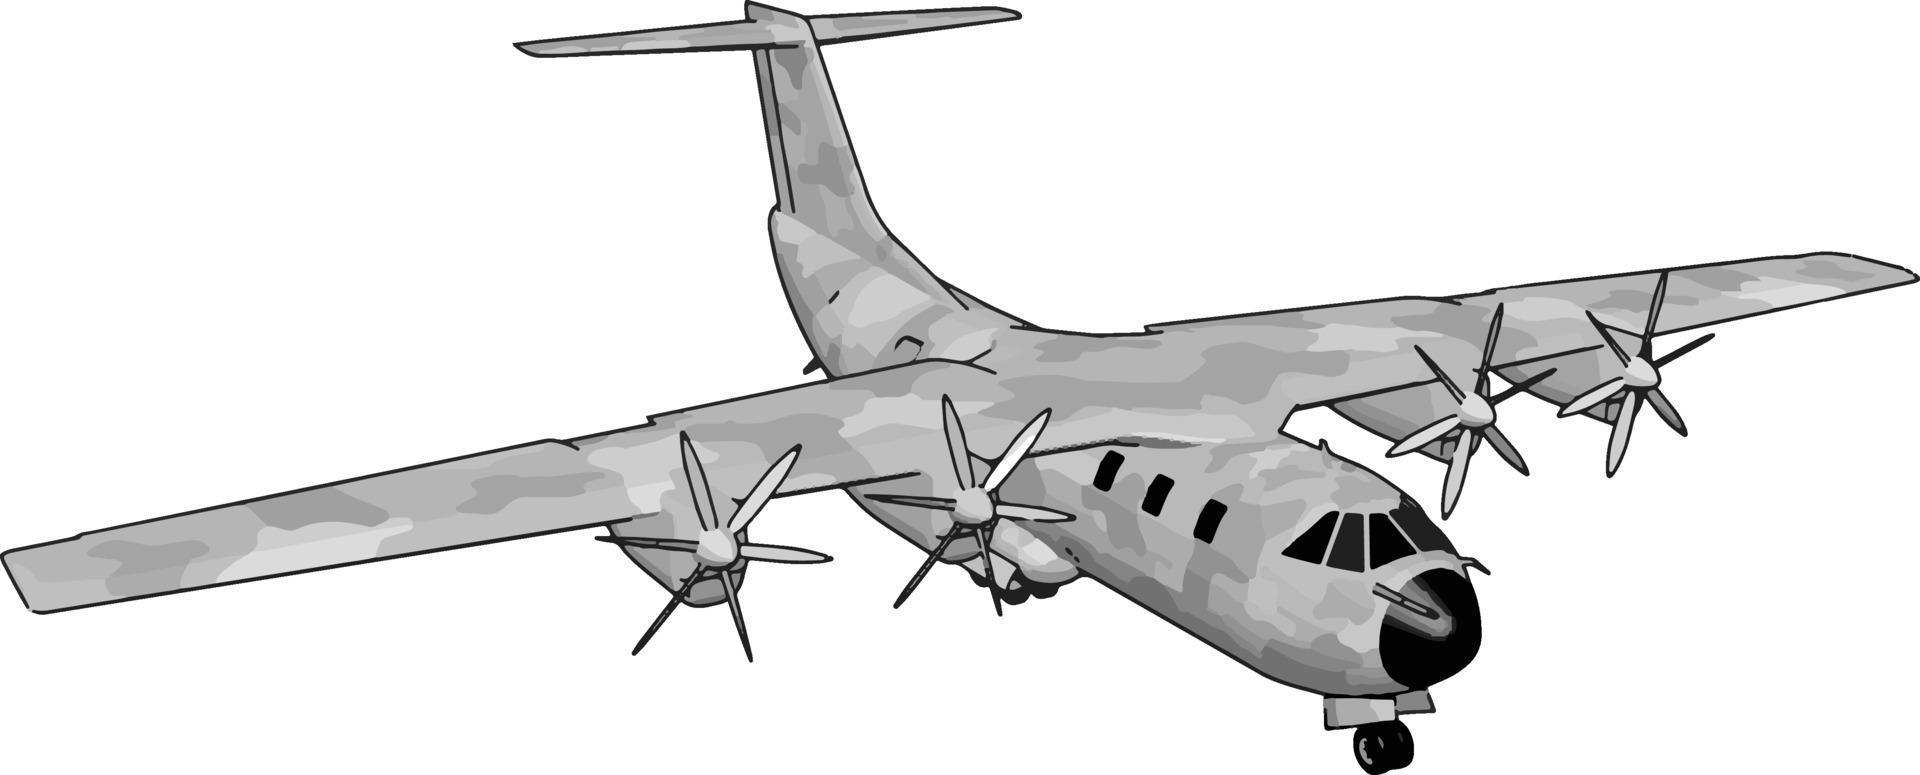 Big old bomber, illustration, vector on white background.